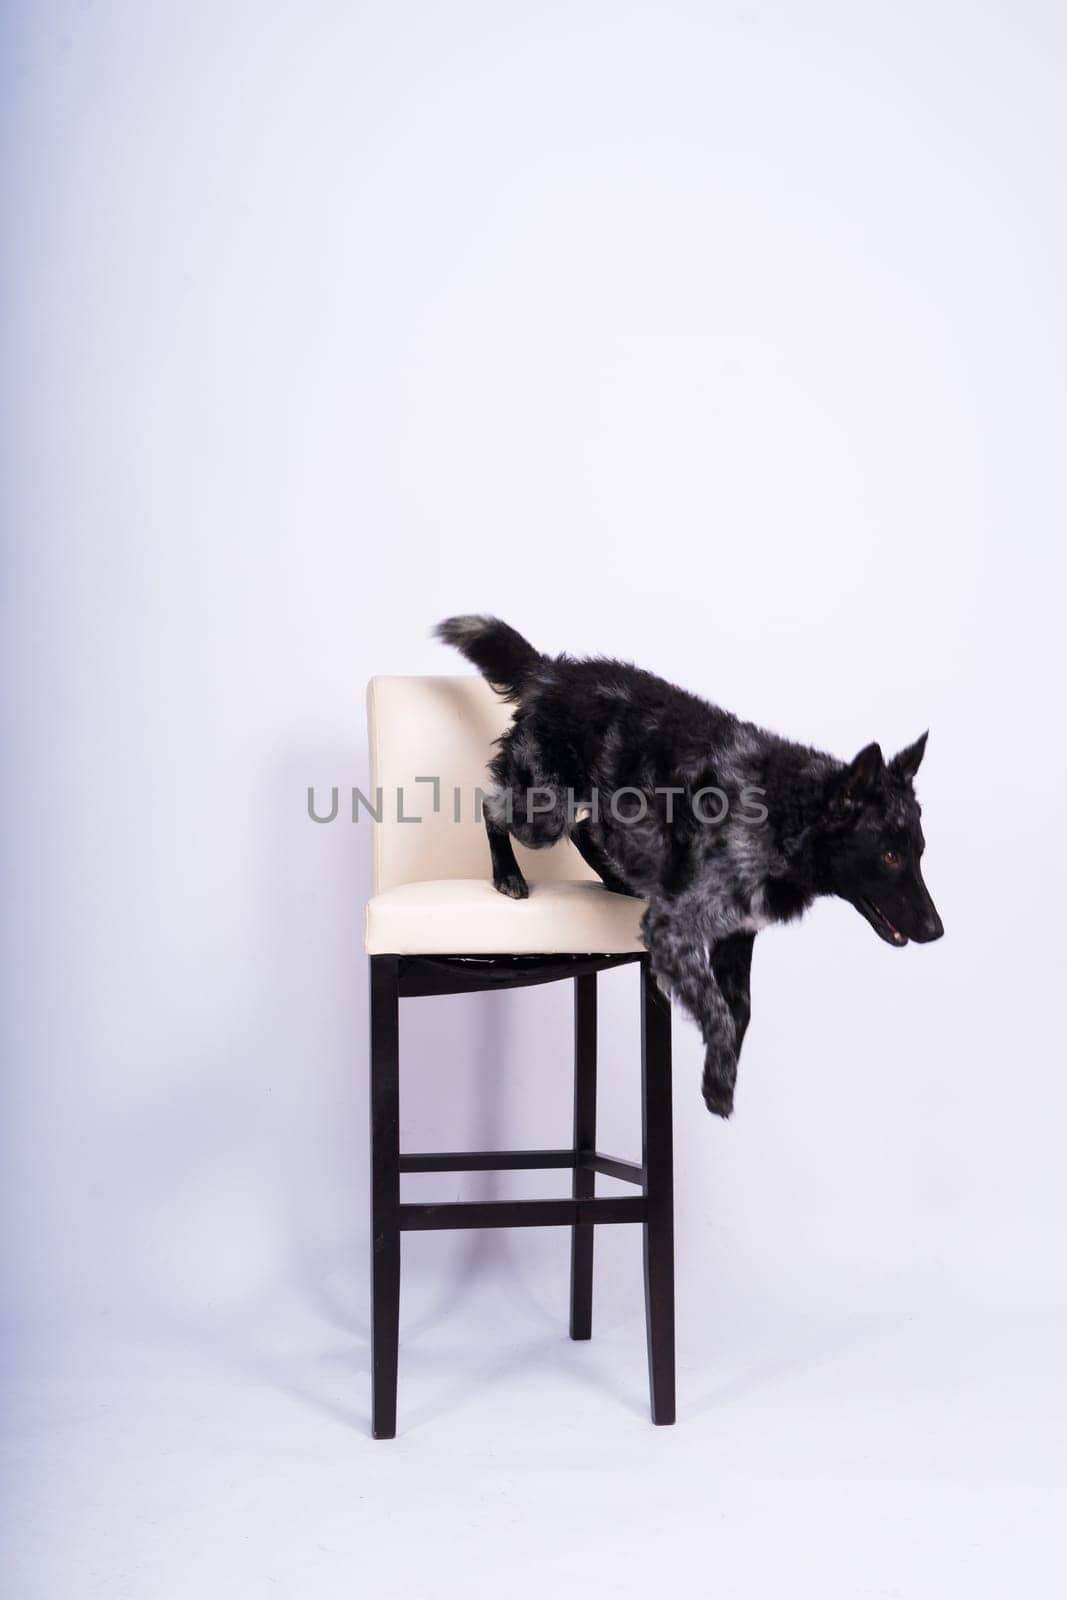 Black White Dog on back brick wall, mudi, studio shot by Zelenin